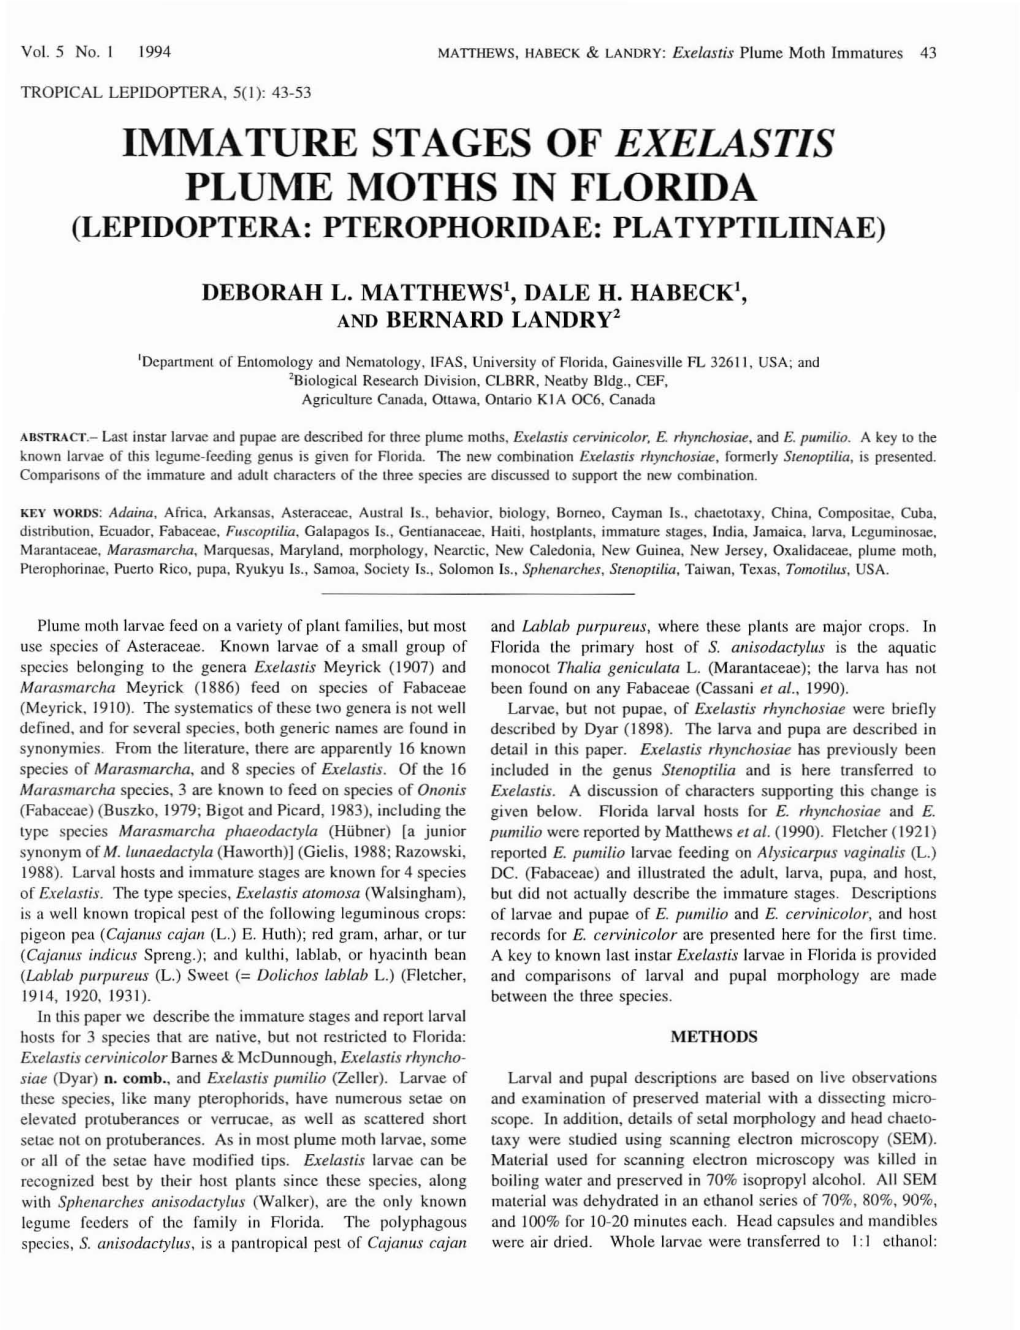 Plume Moths in Florida (Lepidoptera: Pterophoridae: Platyptiliinae)